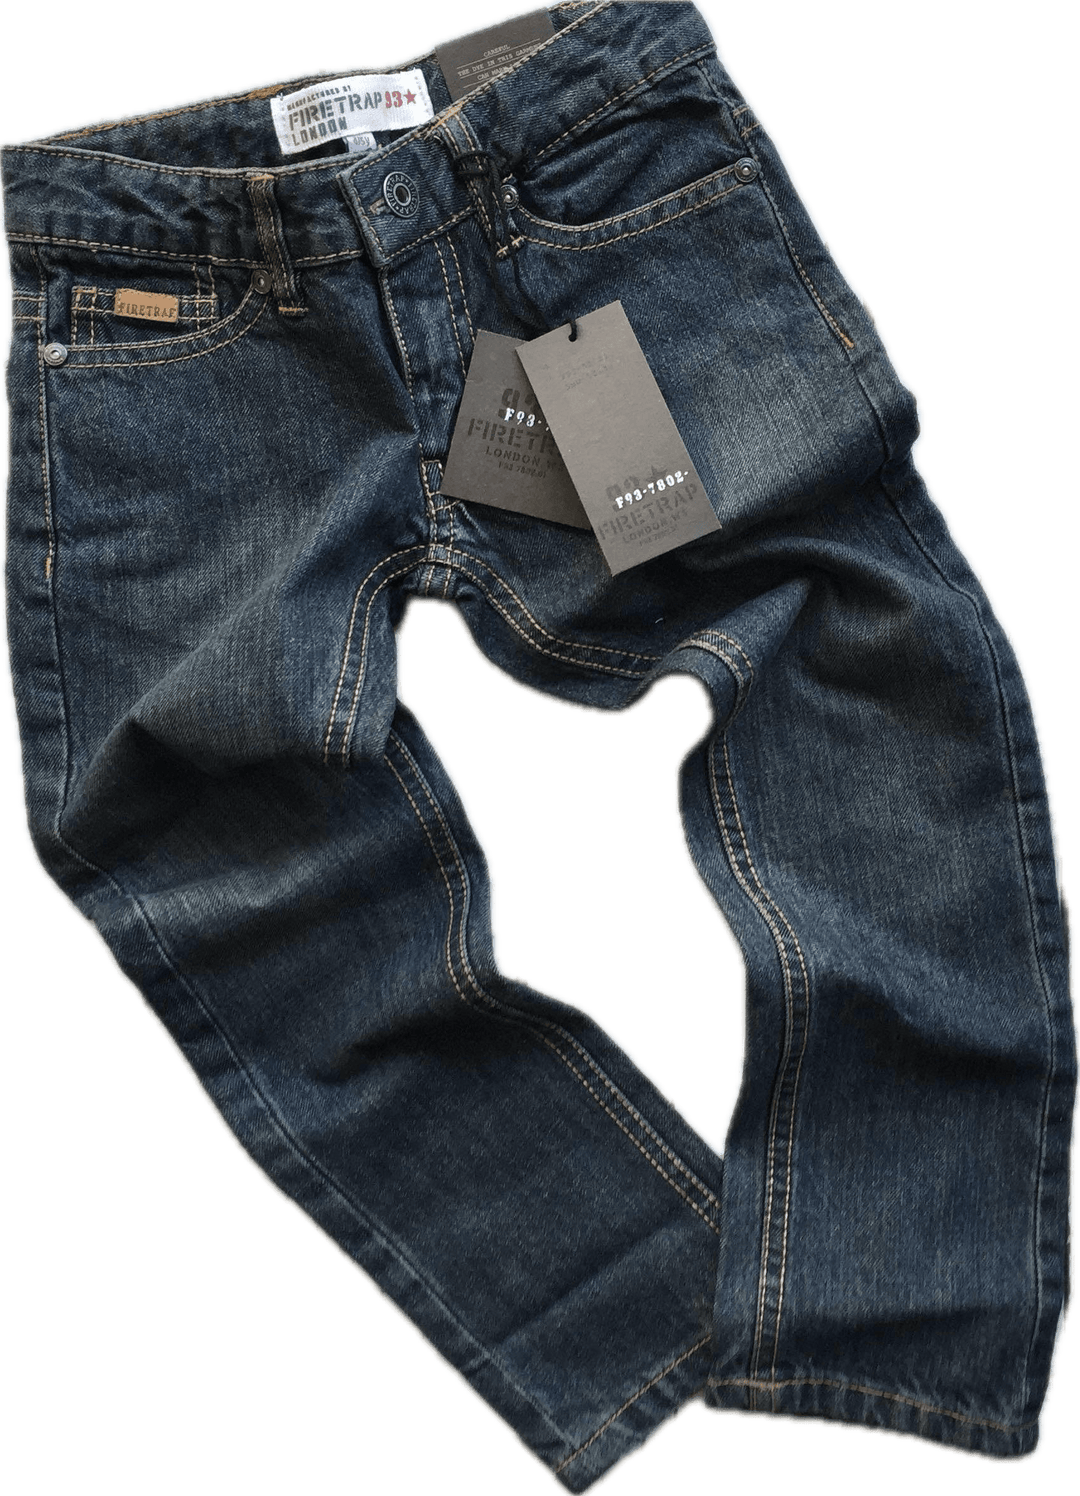 NWT - Firetrap Boys Skinny Jeans - Size 6/7 - Jean Pool